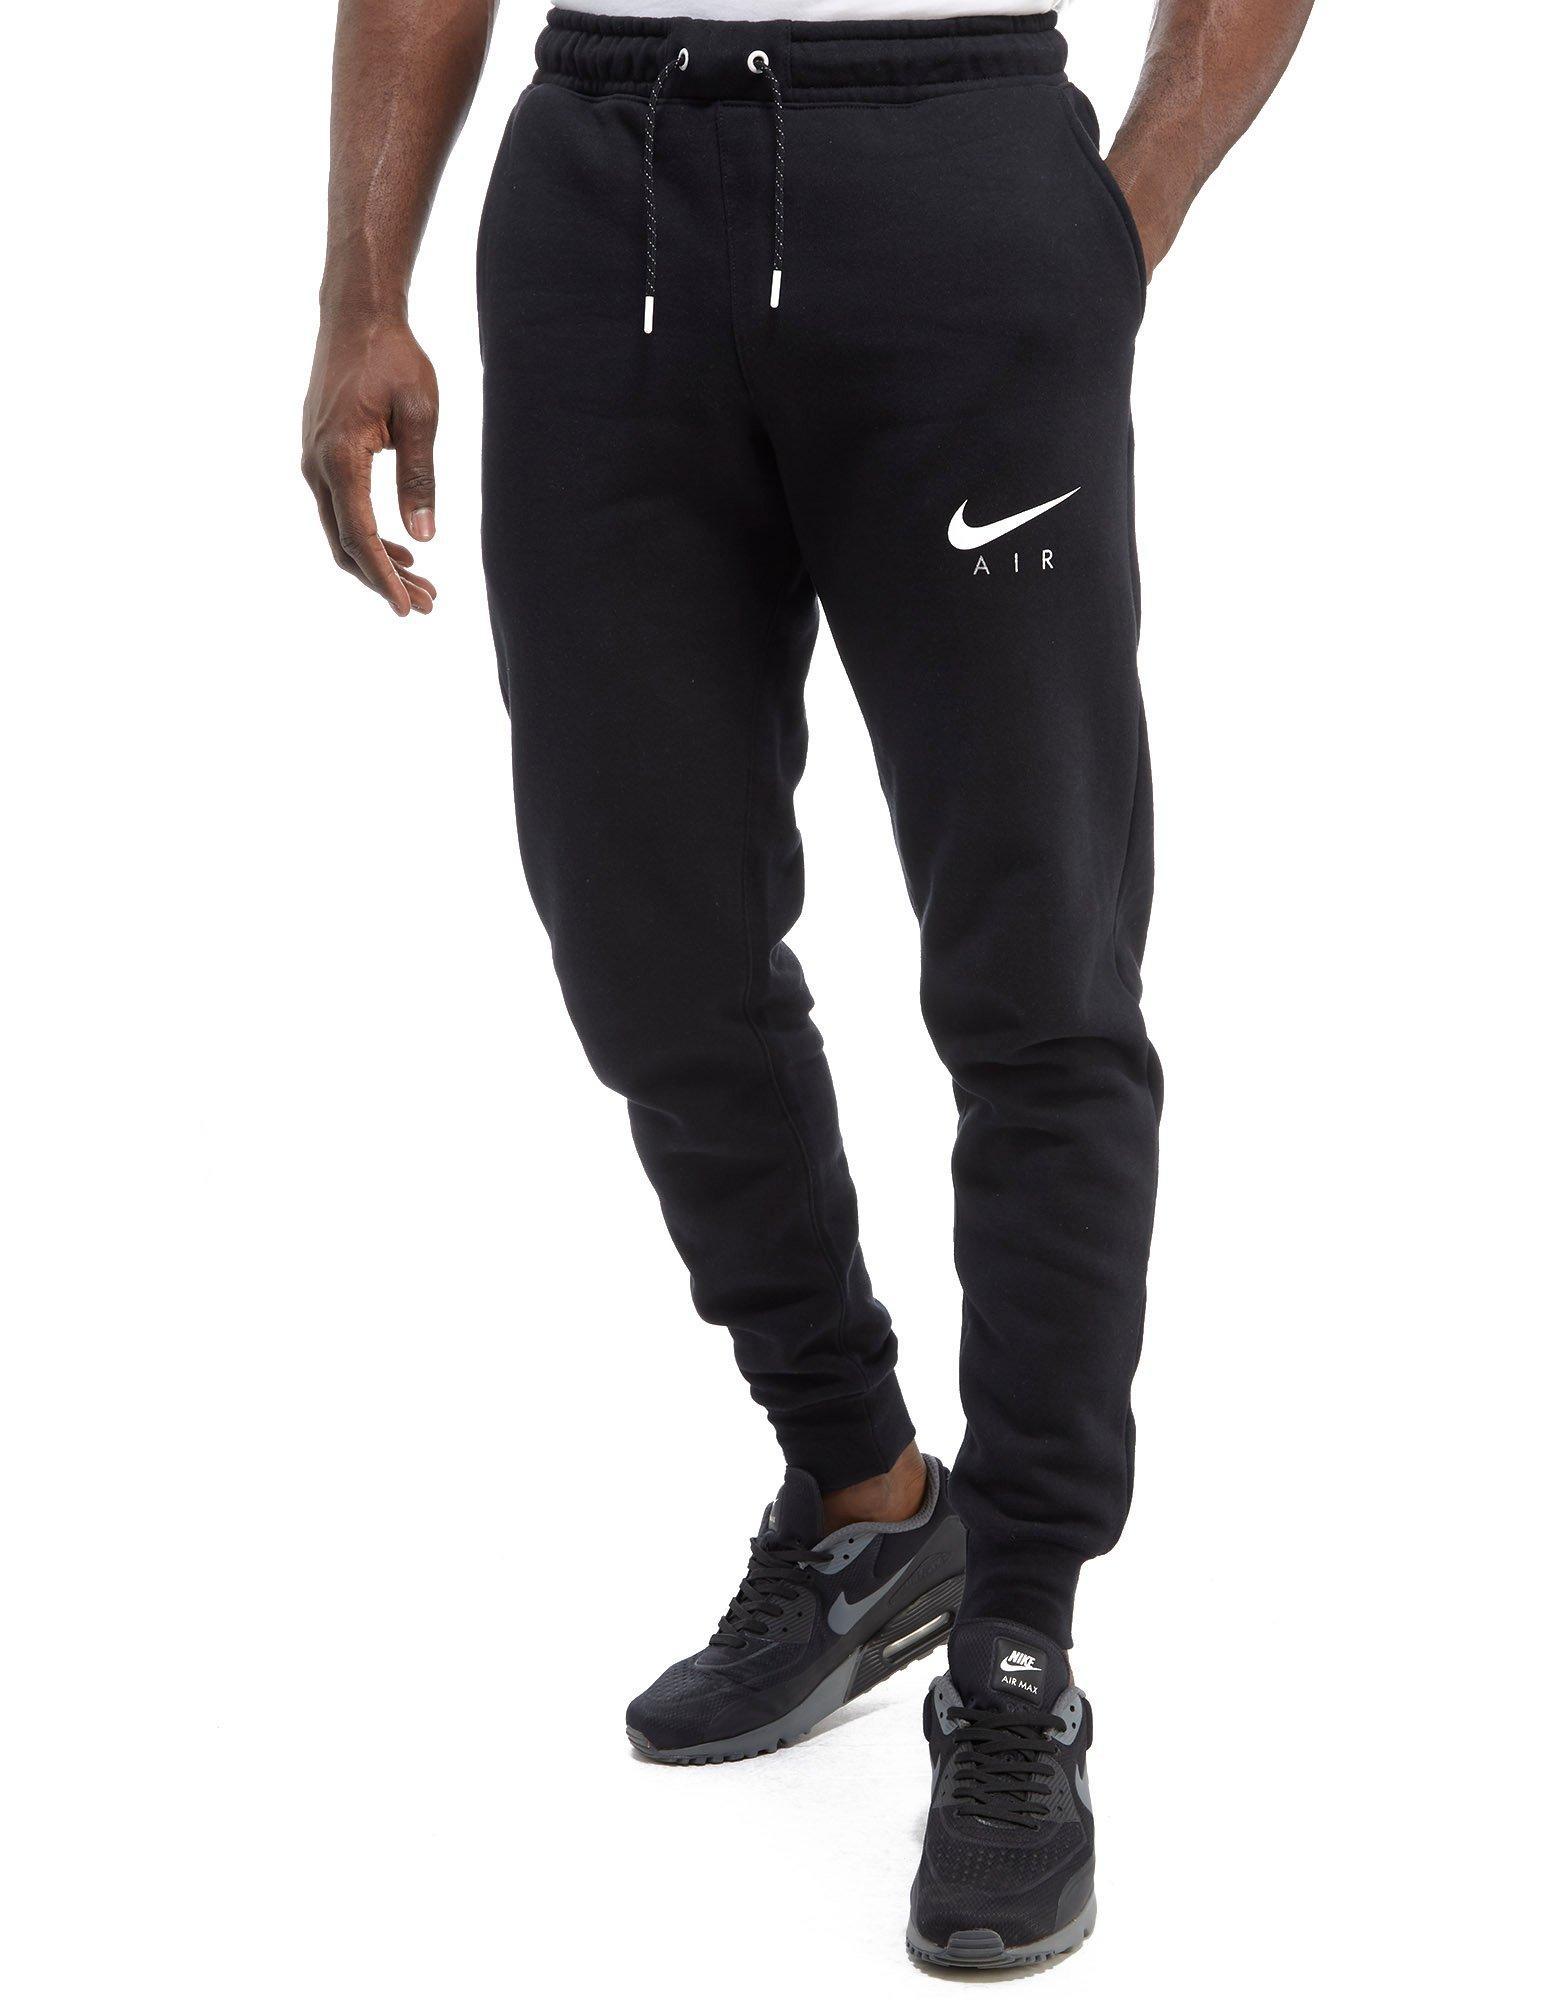 Lyst - Nike Air Hybrid Jogging Pants in Black for Men